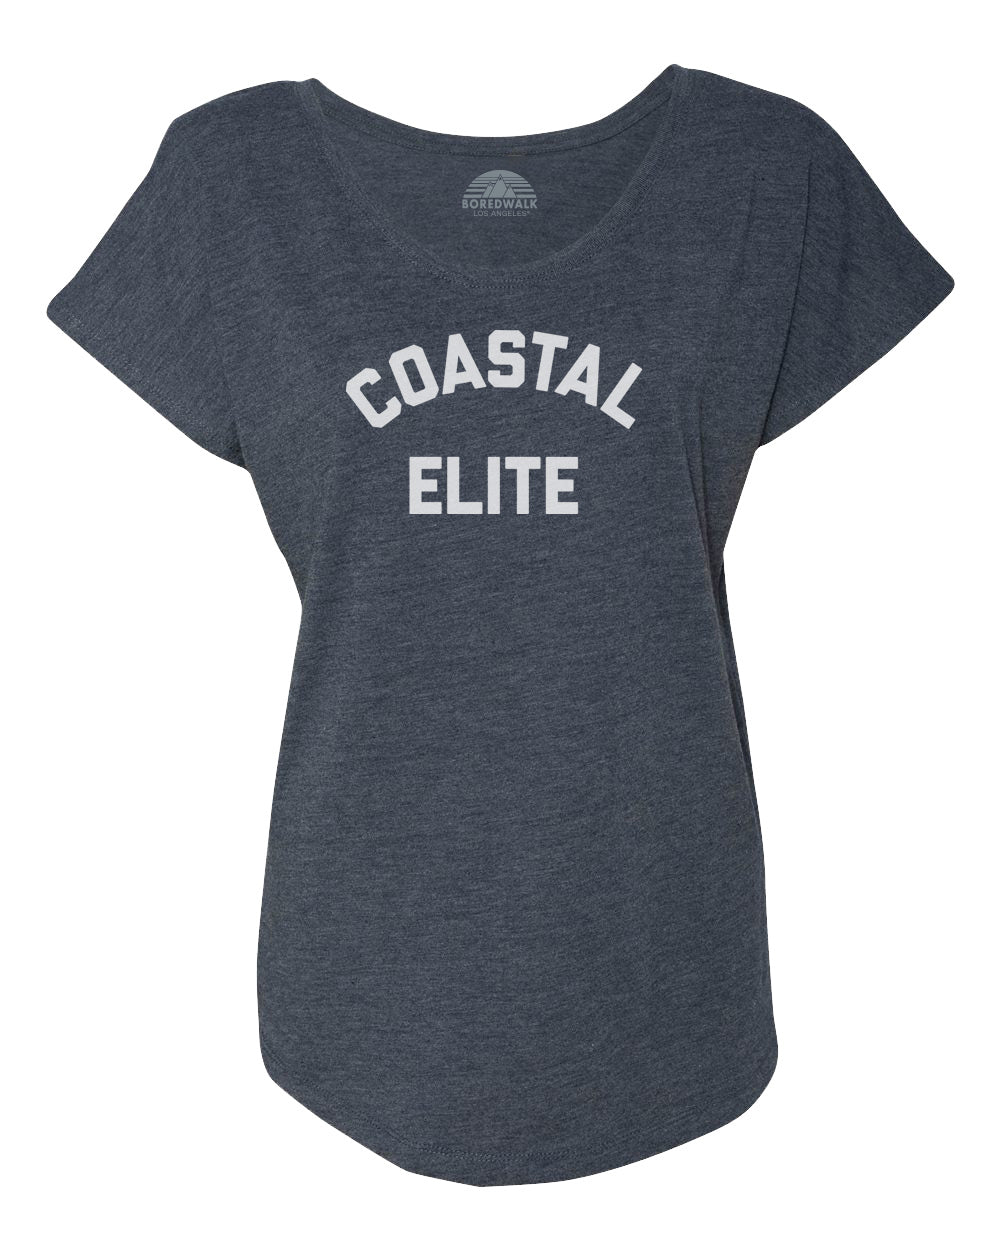 Women's Coastal Elite Scoop Neck T-Shirt